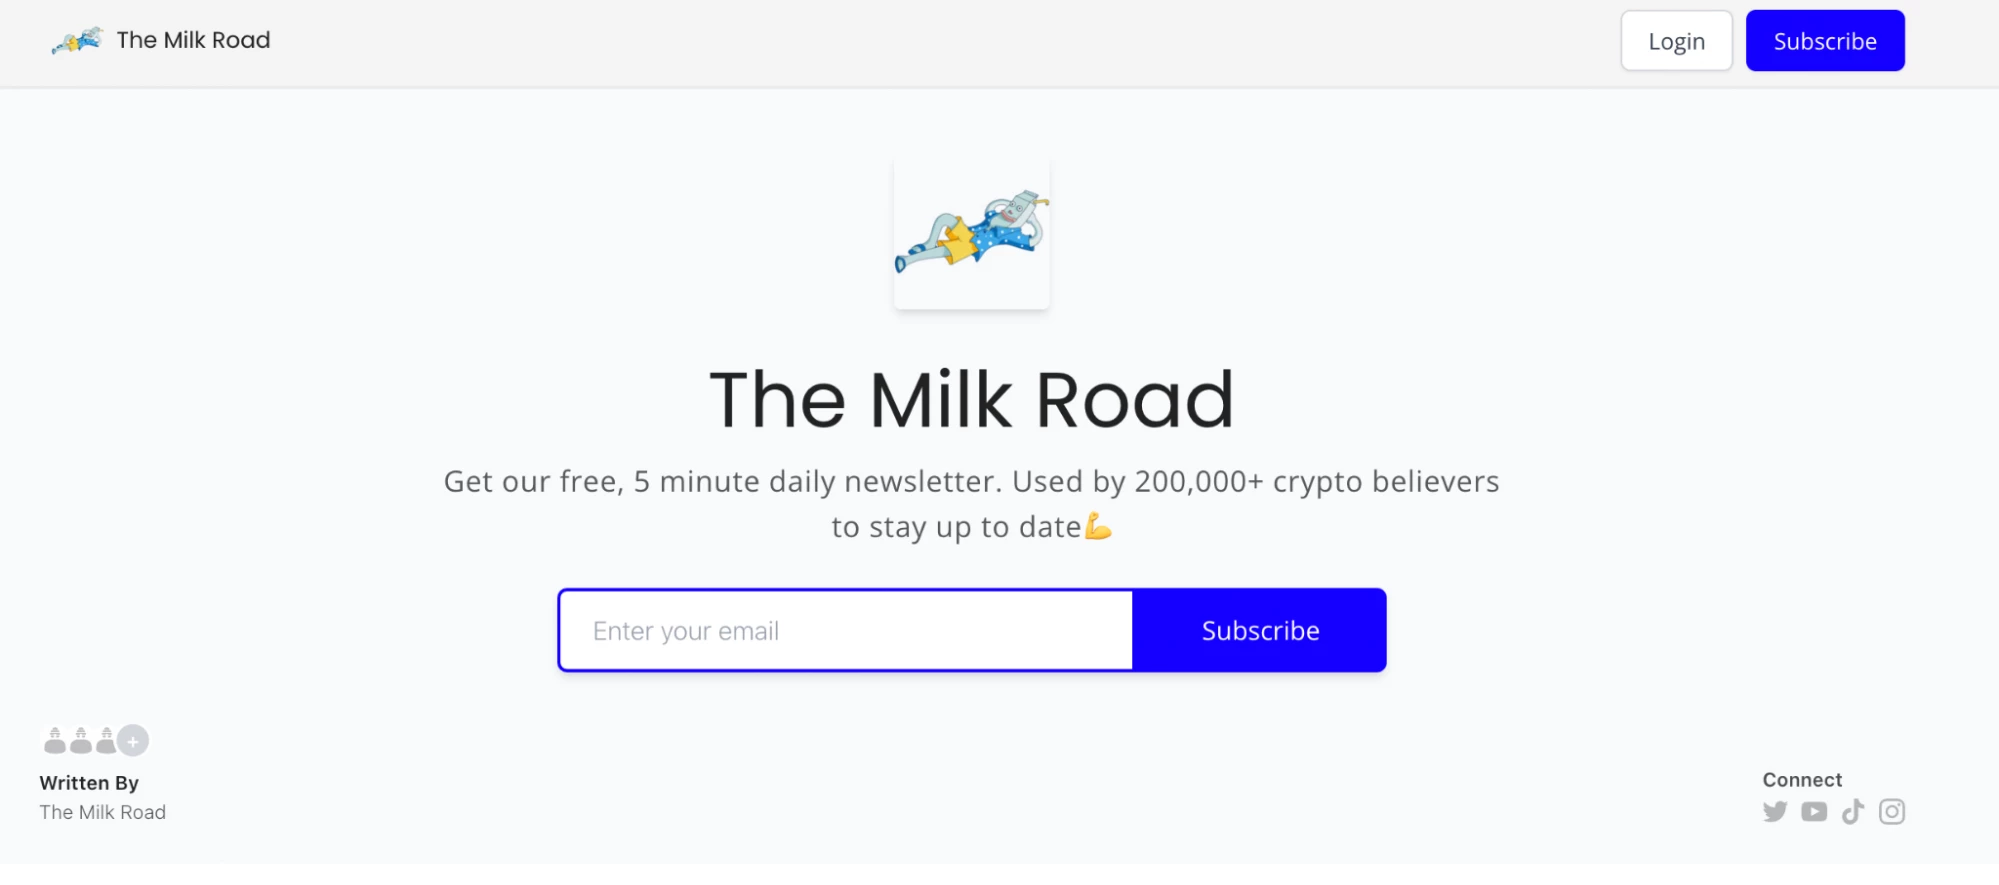 The Milk Road homepage